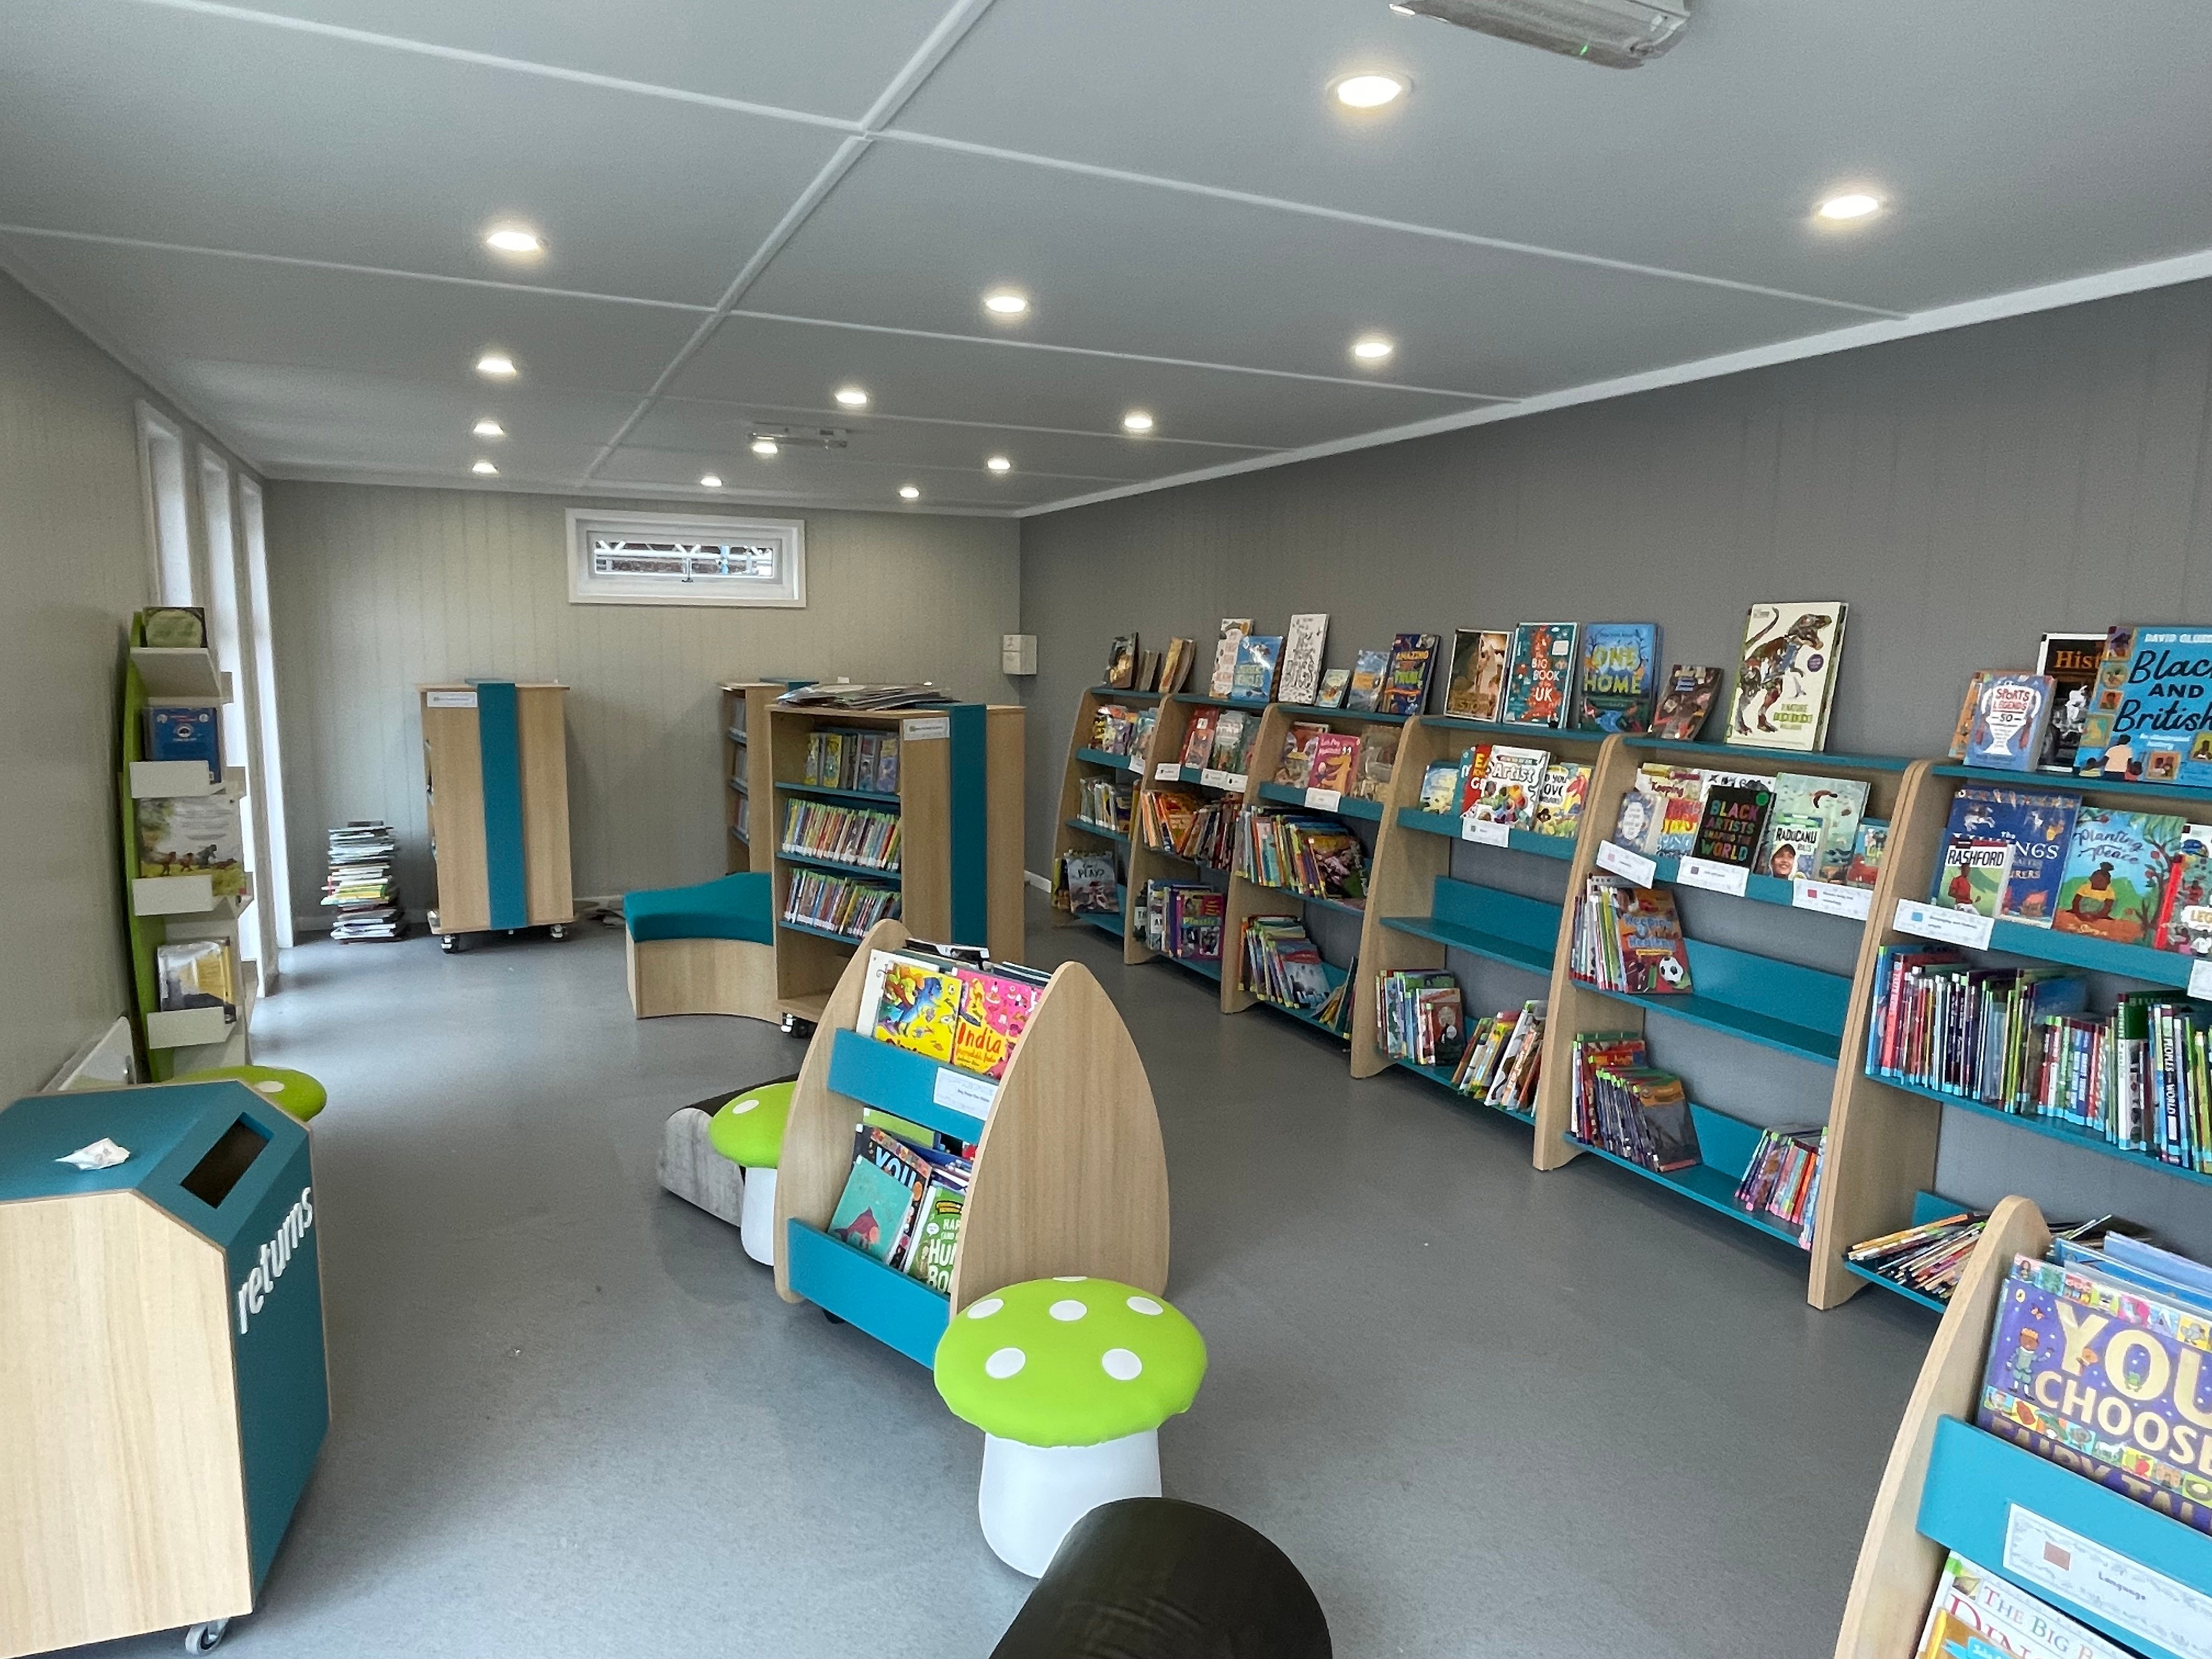 Cabins For Schools Morven Park library building for children